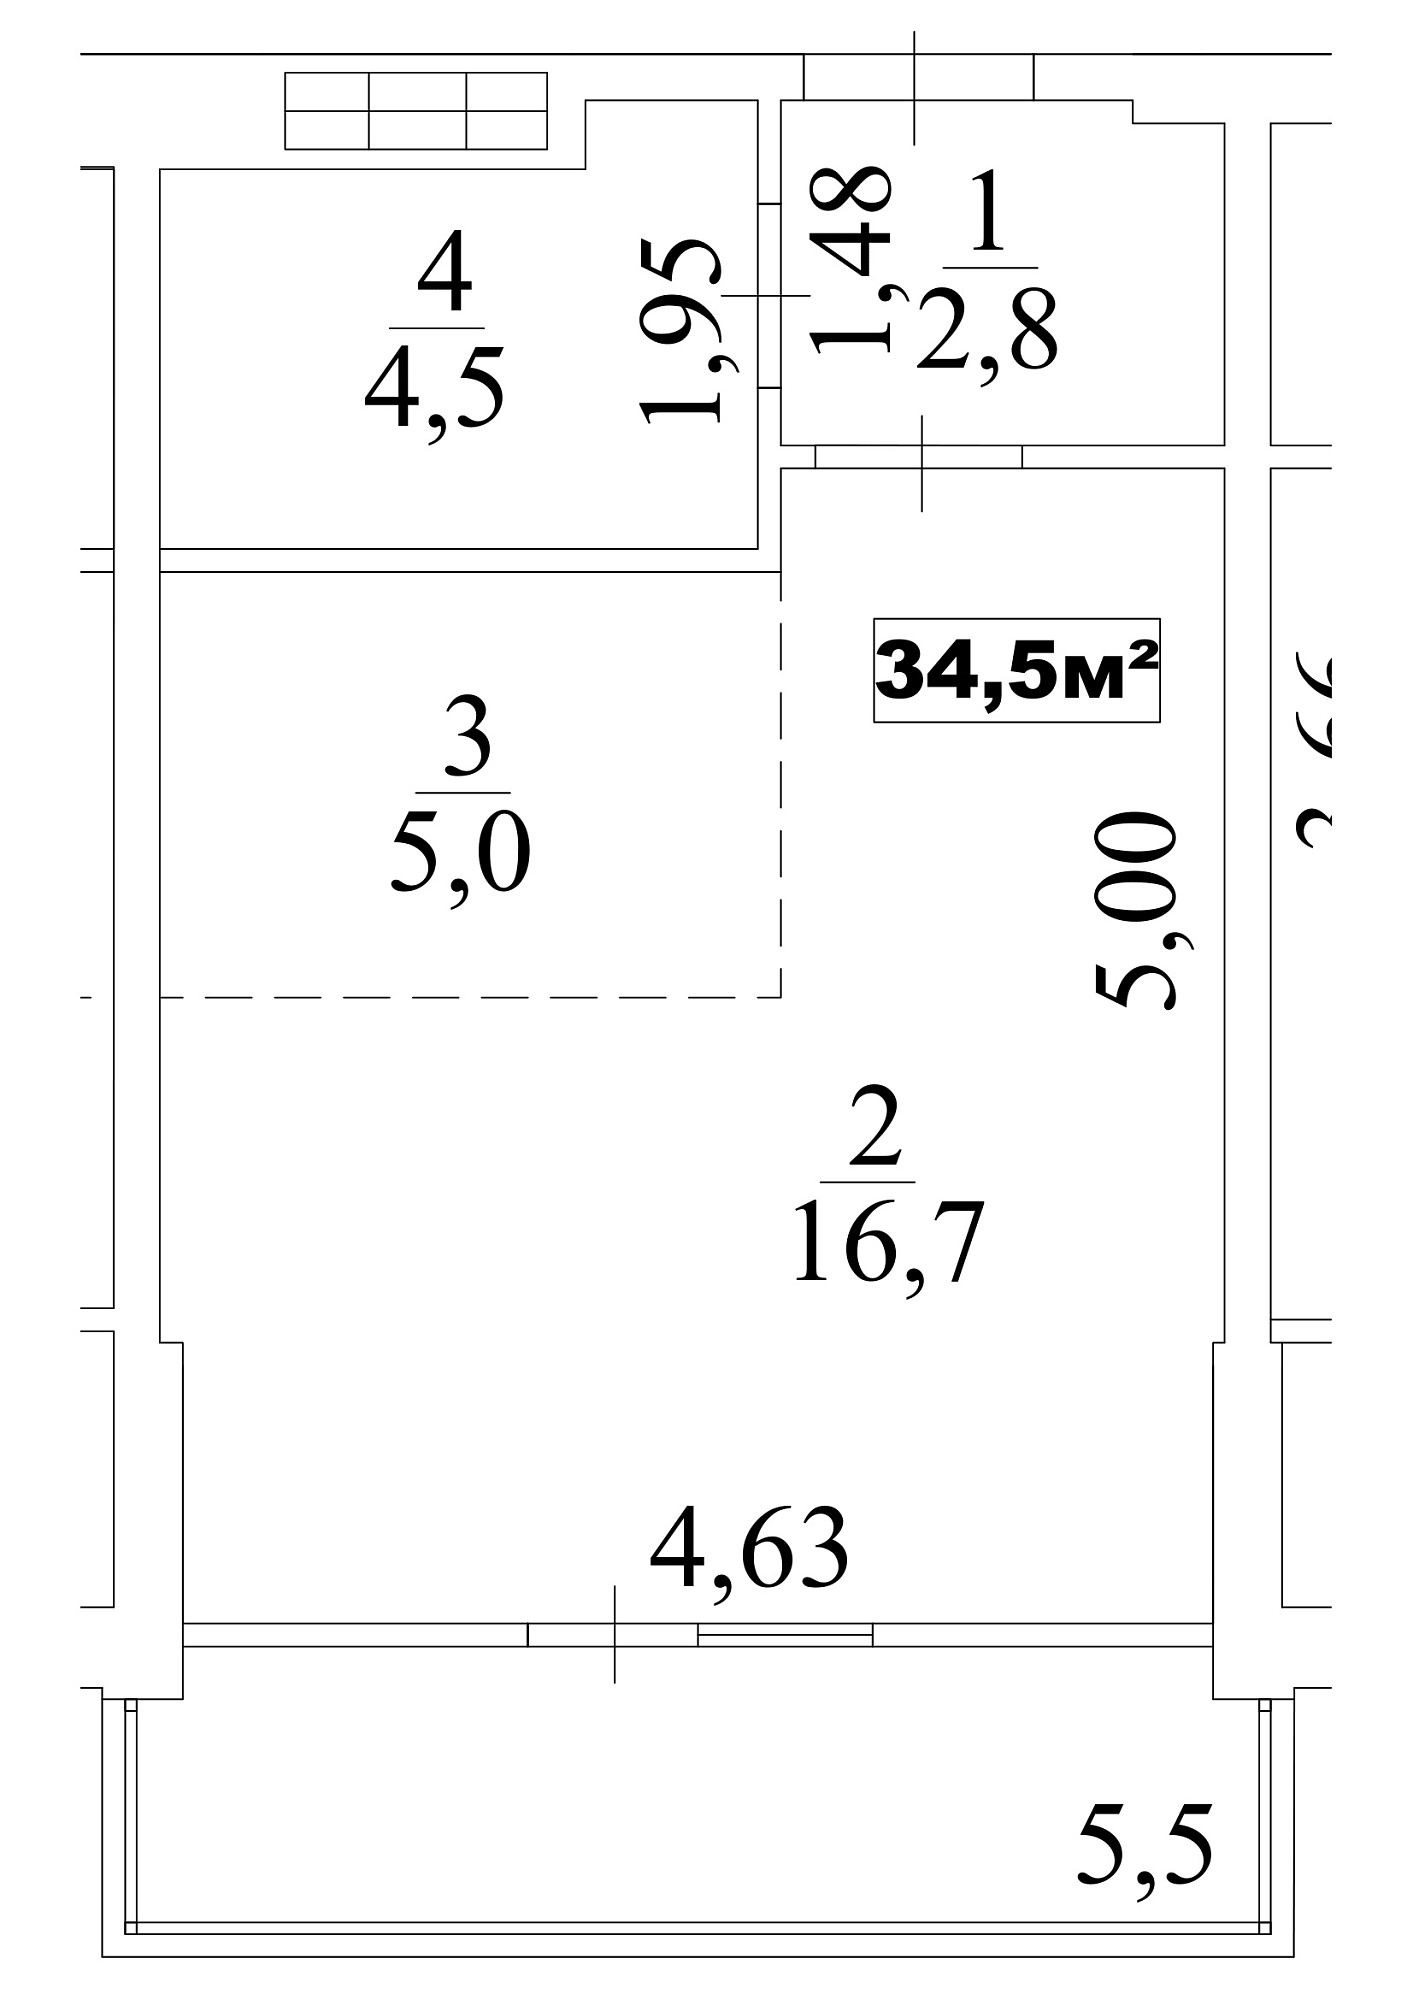 Planning Smart flats area 34.5m2, AB-10-09/0073б.